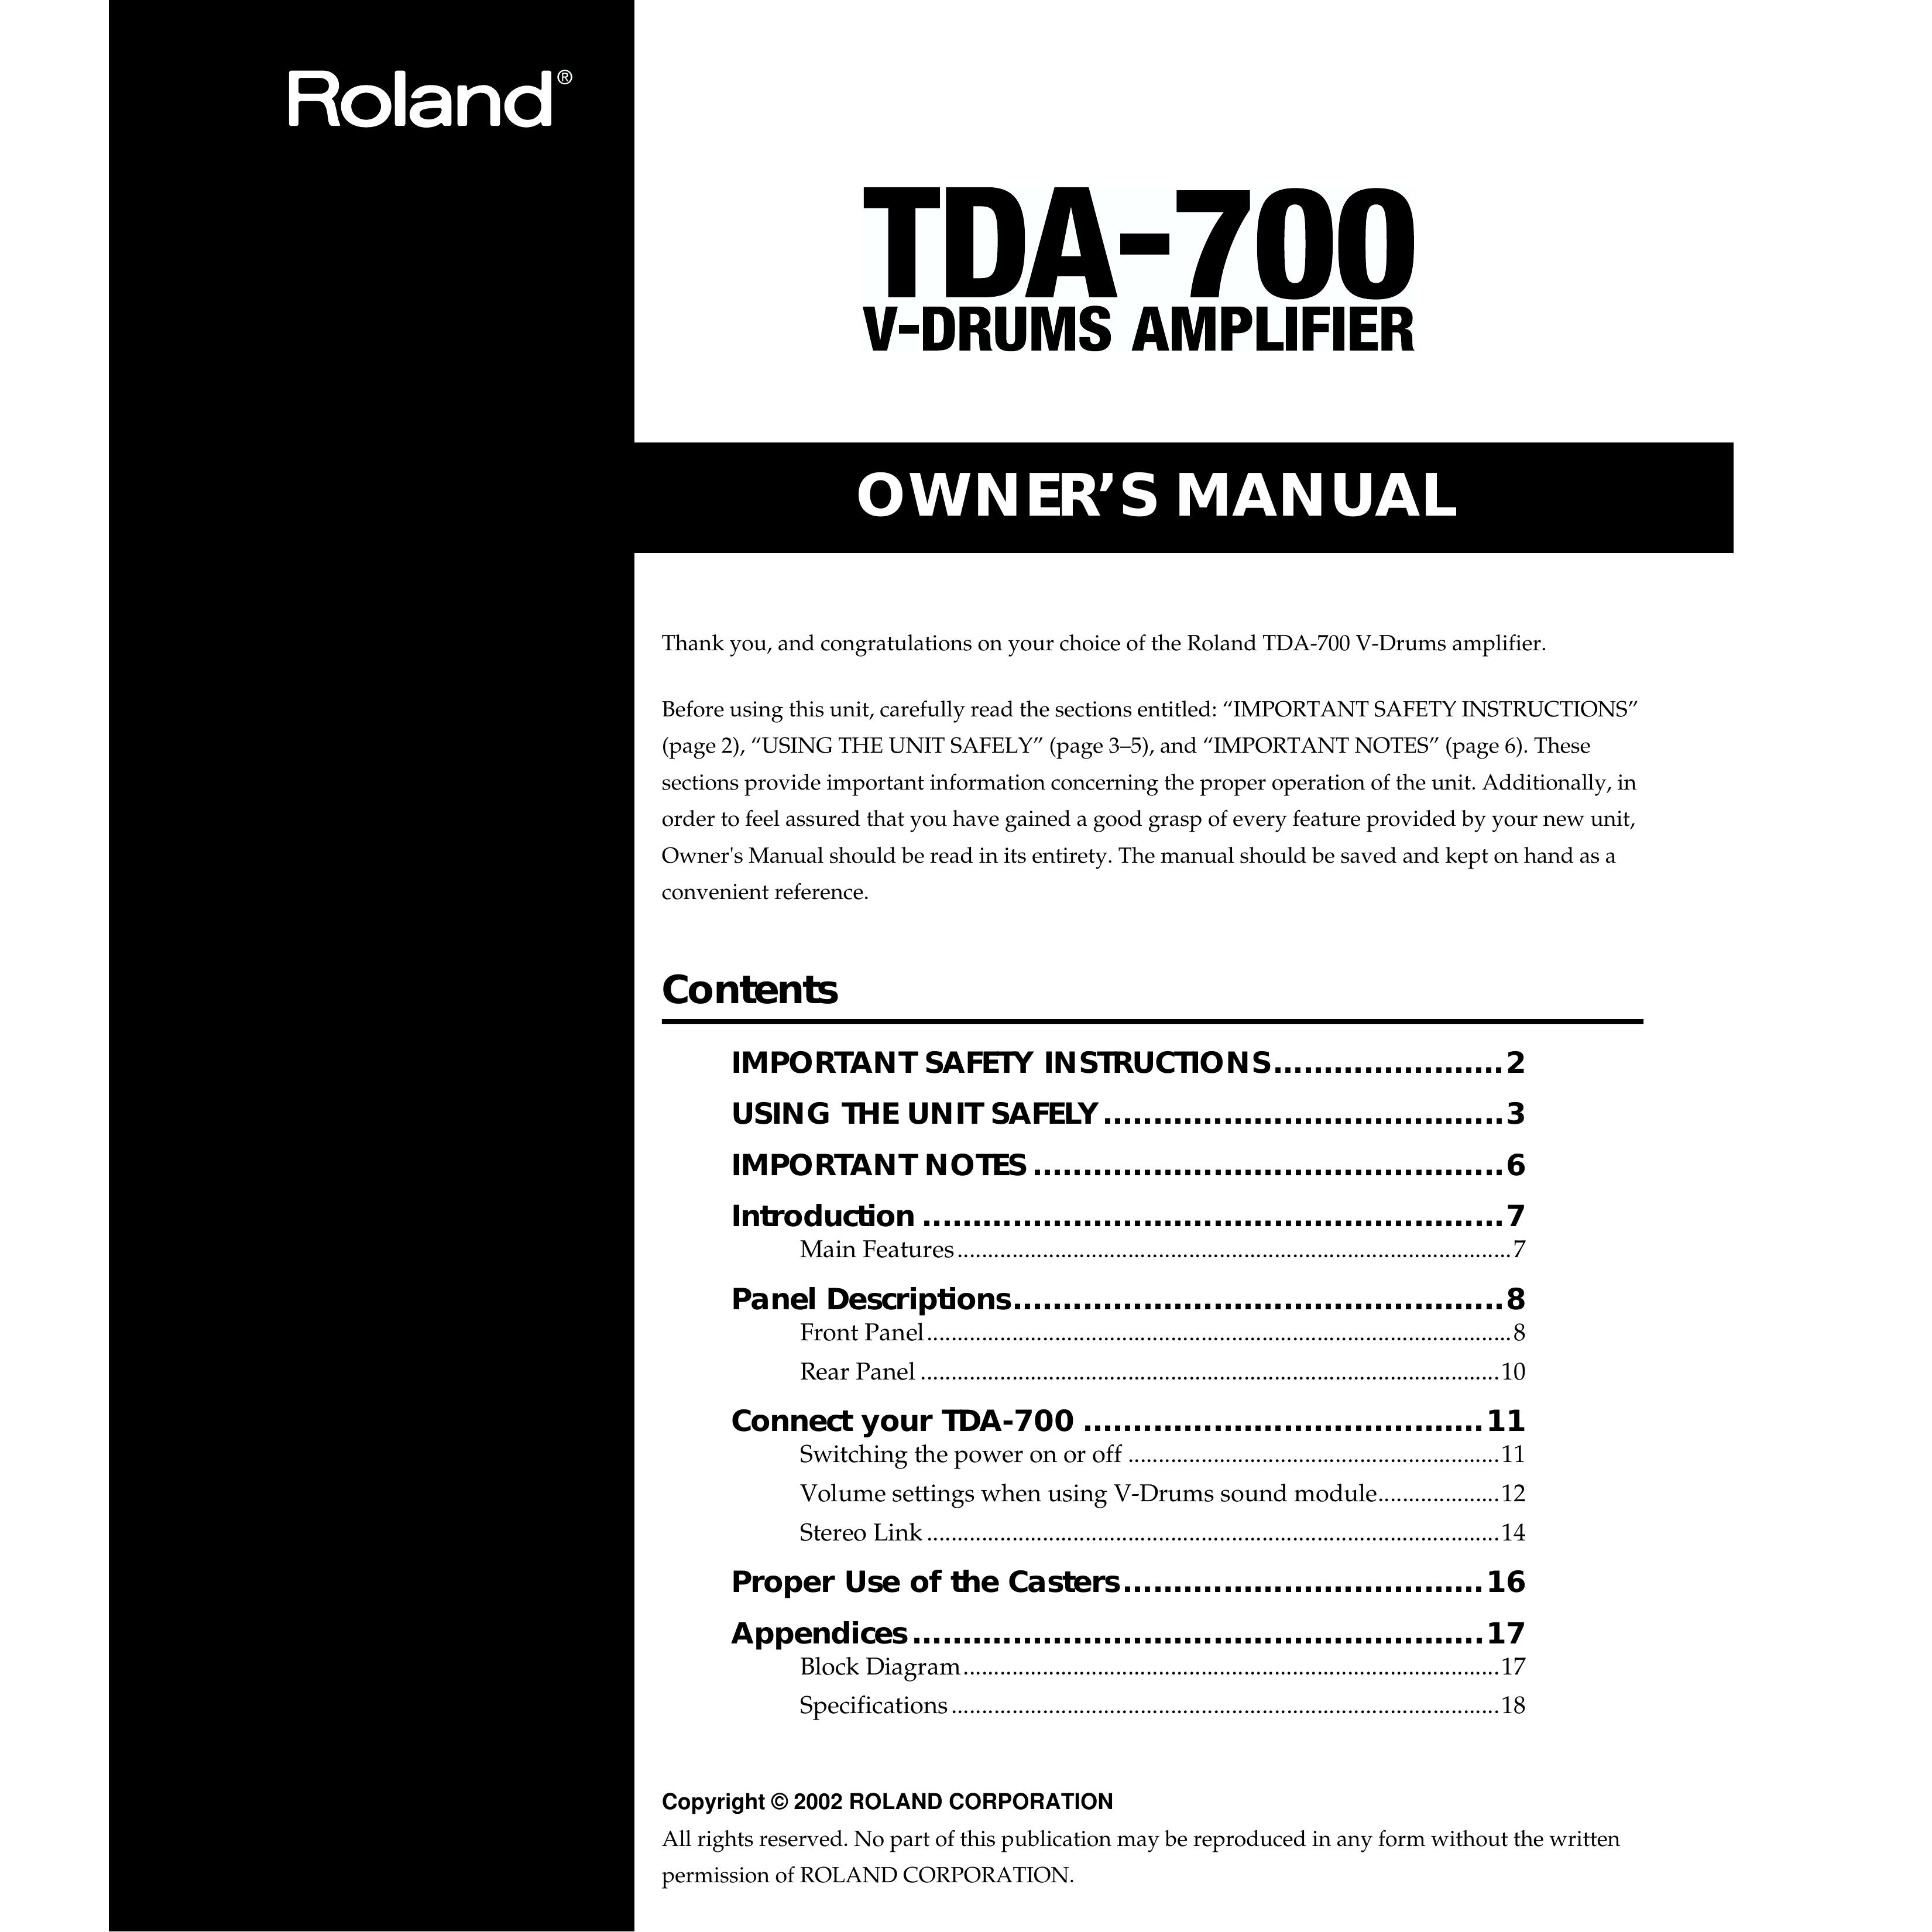 Roland TDA-700 Music Mixer User Manual